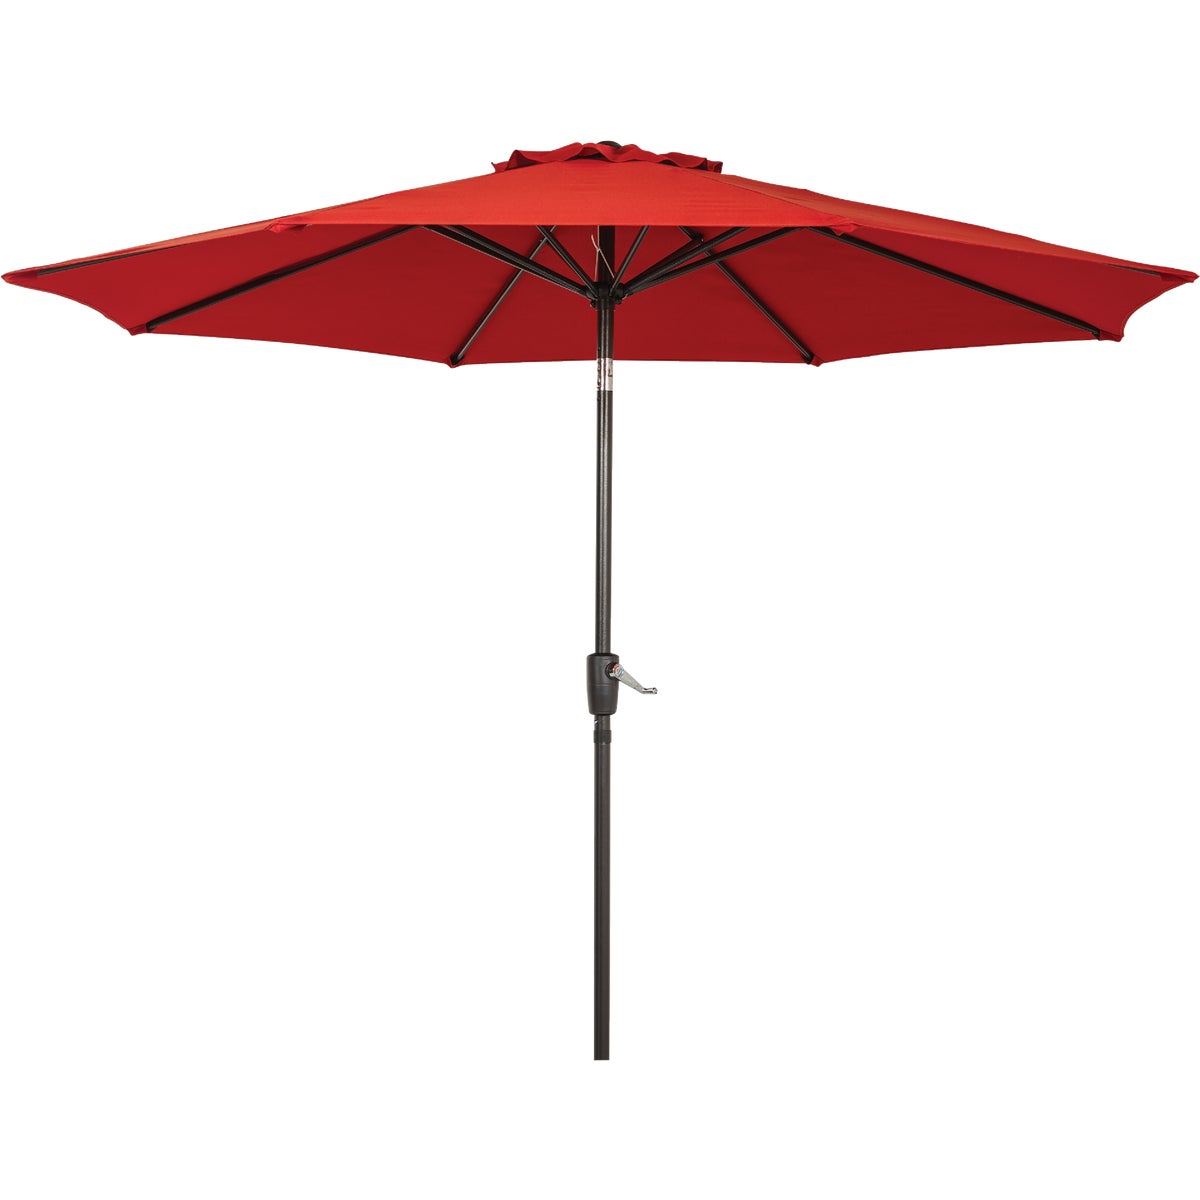 Outdoor Expressions 9 Ft. Aluminum Tilt/Crank Crimson Red Patio Umbrella